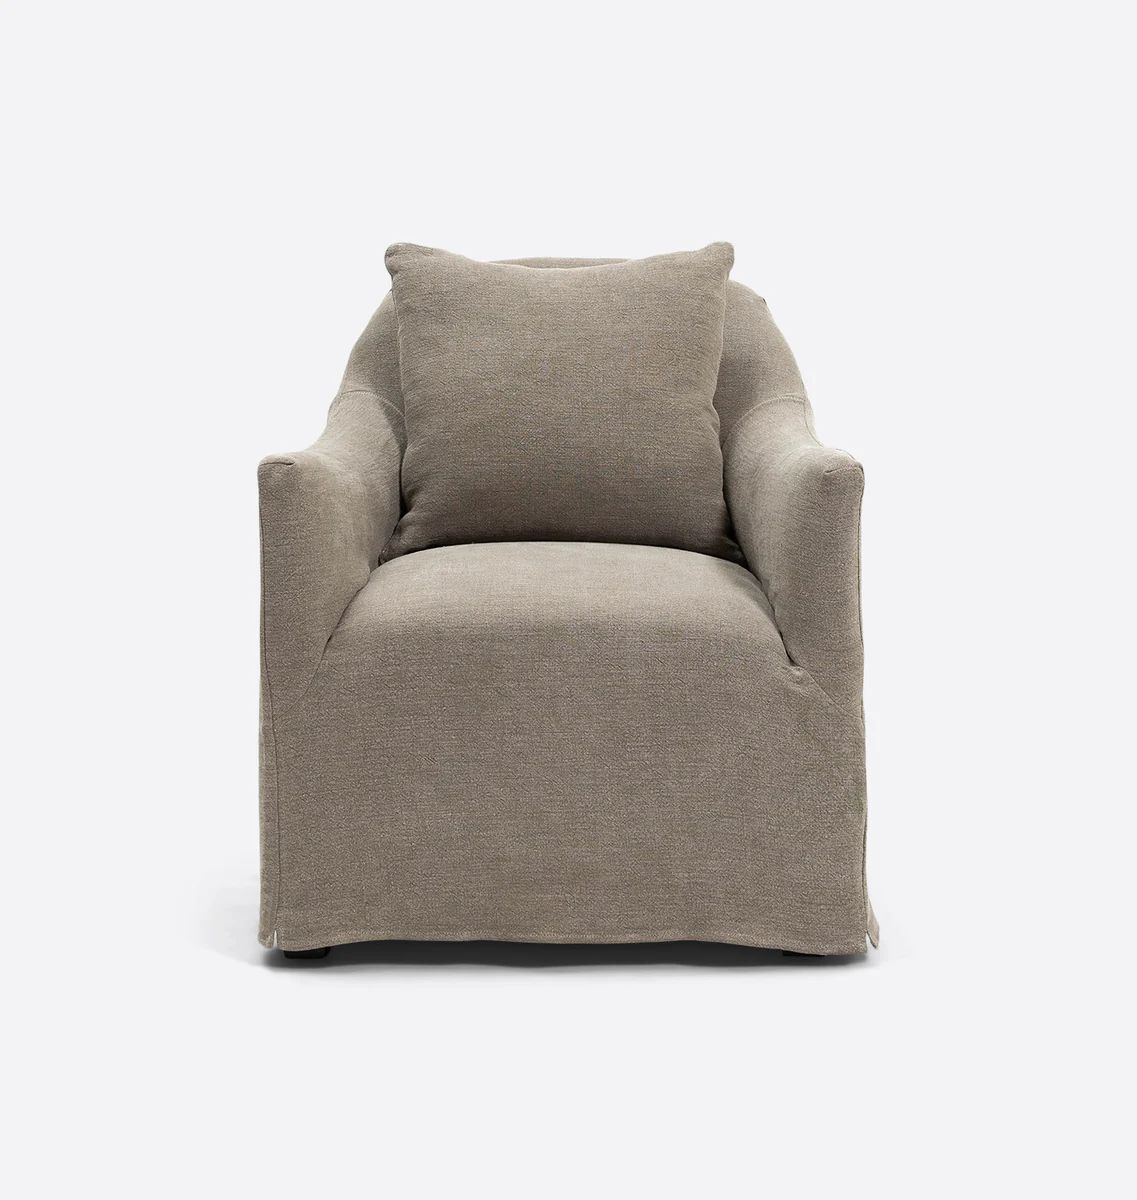 Luna Slipcovered Chair | Amber Interiors